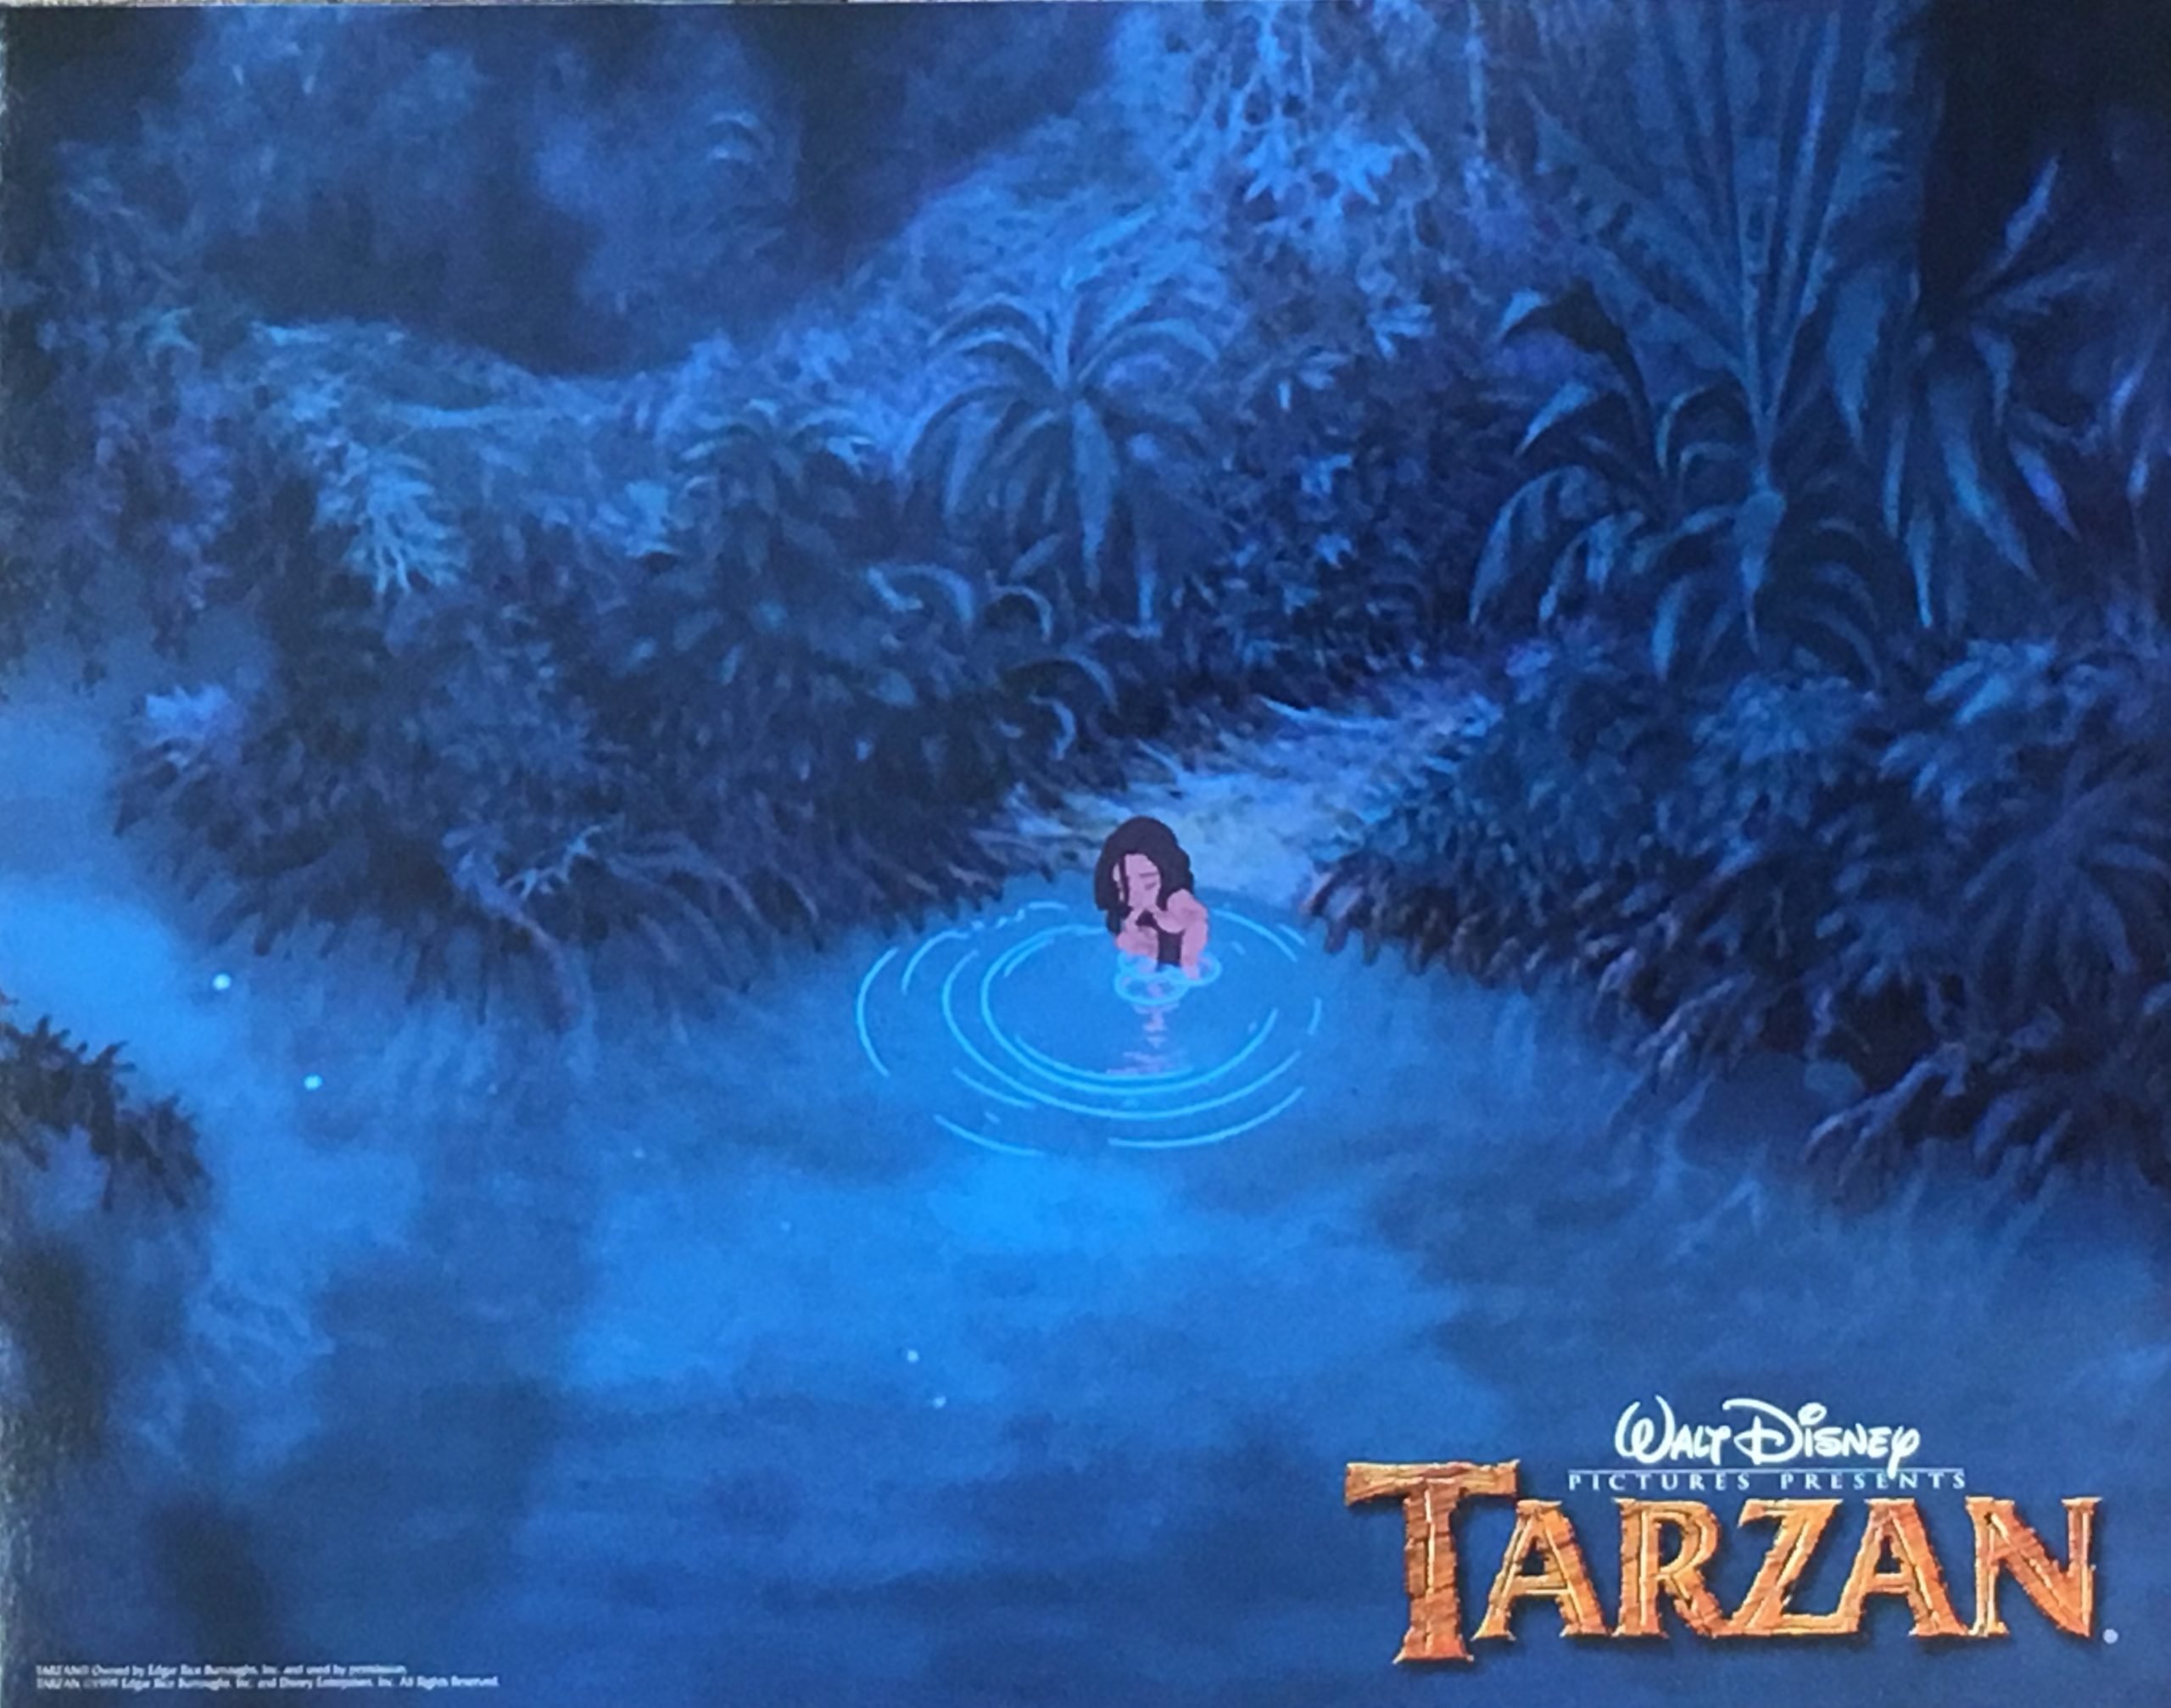 Original vintage US cinema lobby card poster for Disney's Tarzan